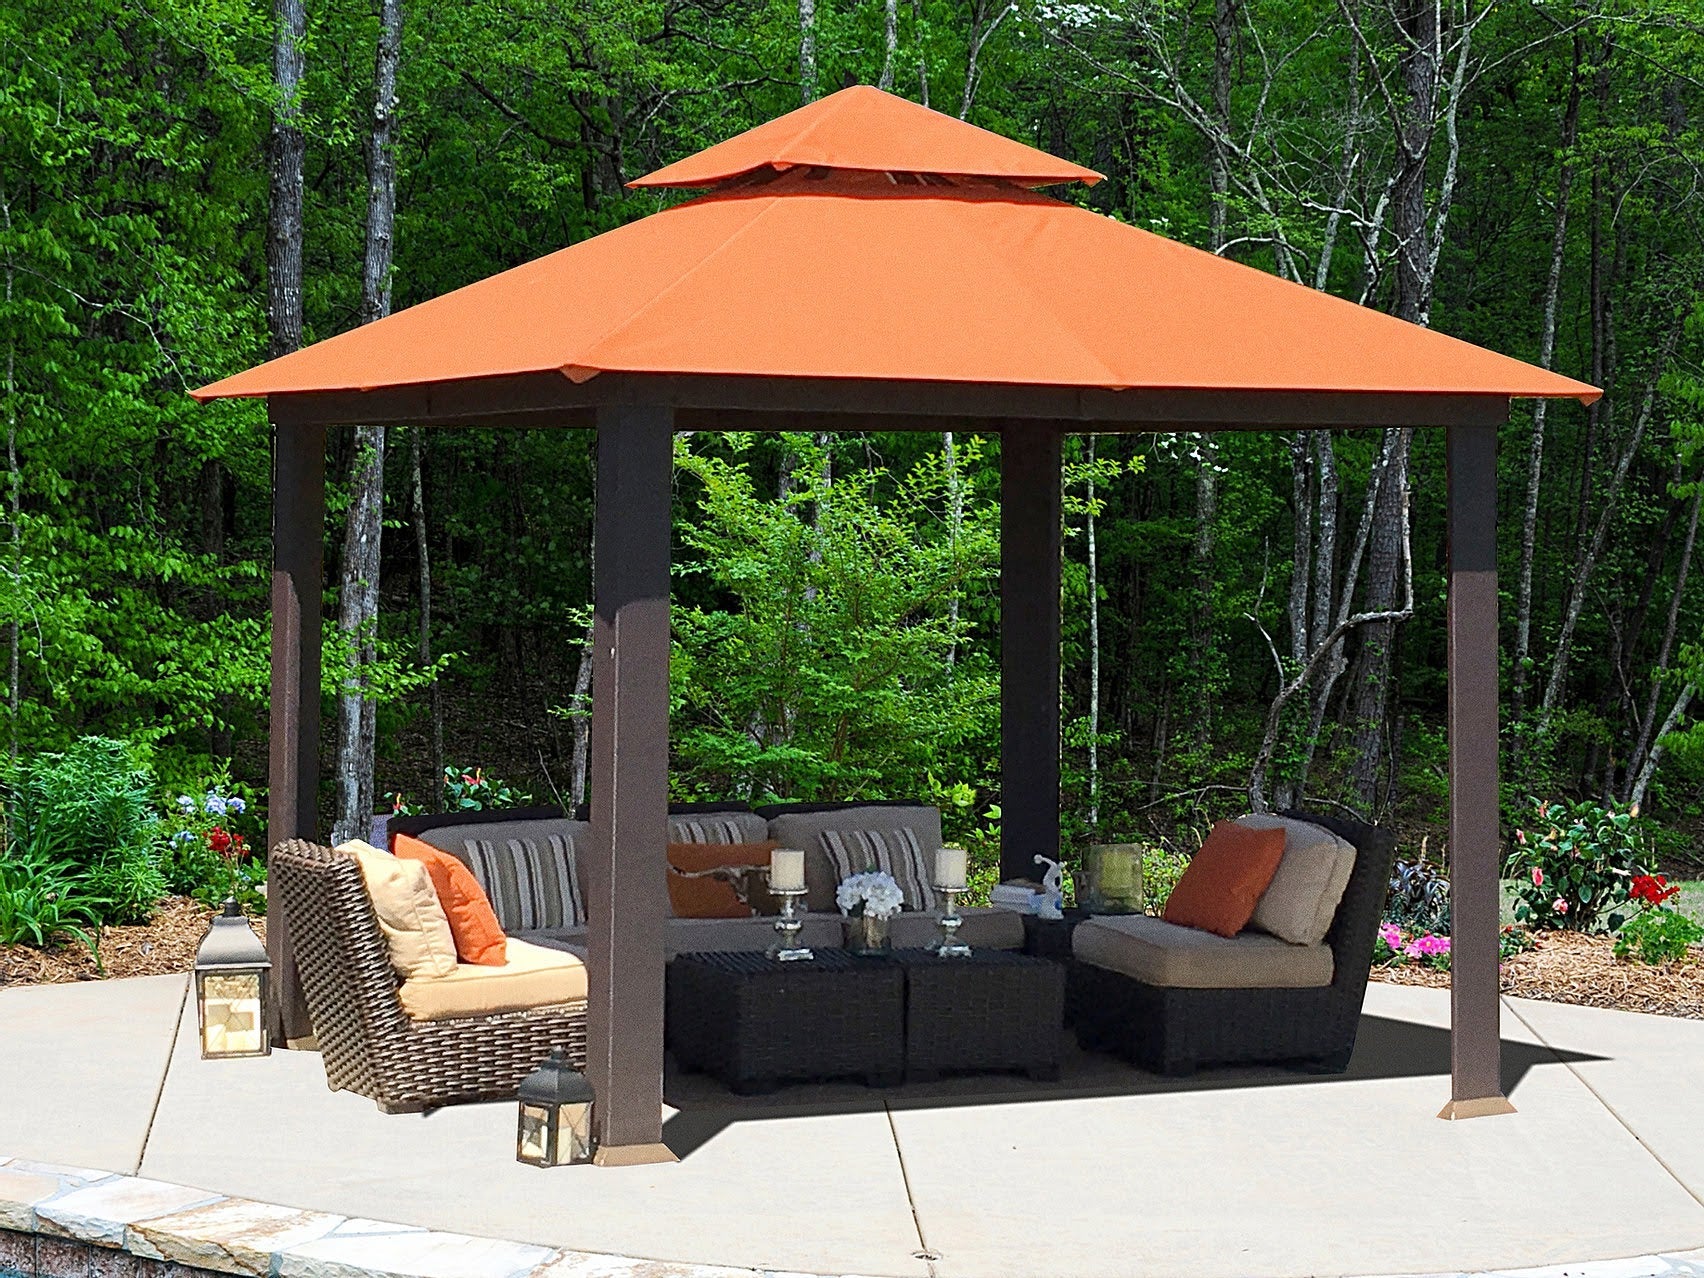 orange soft top gazebo with outdoor seating